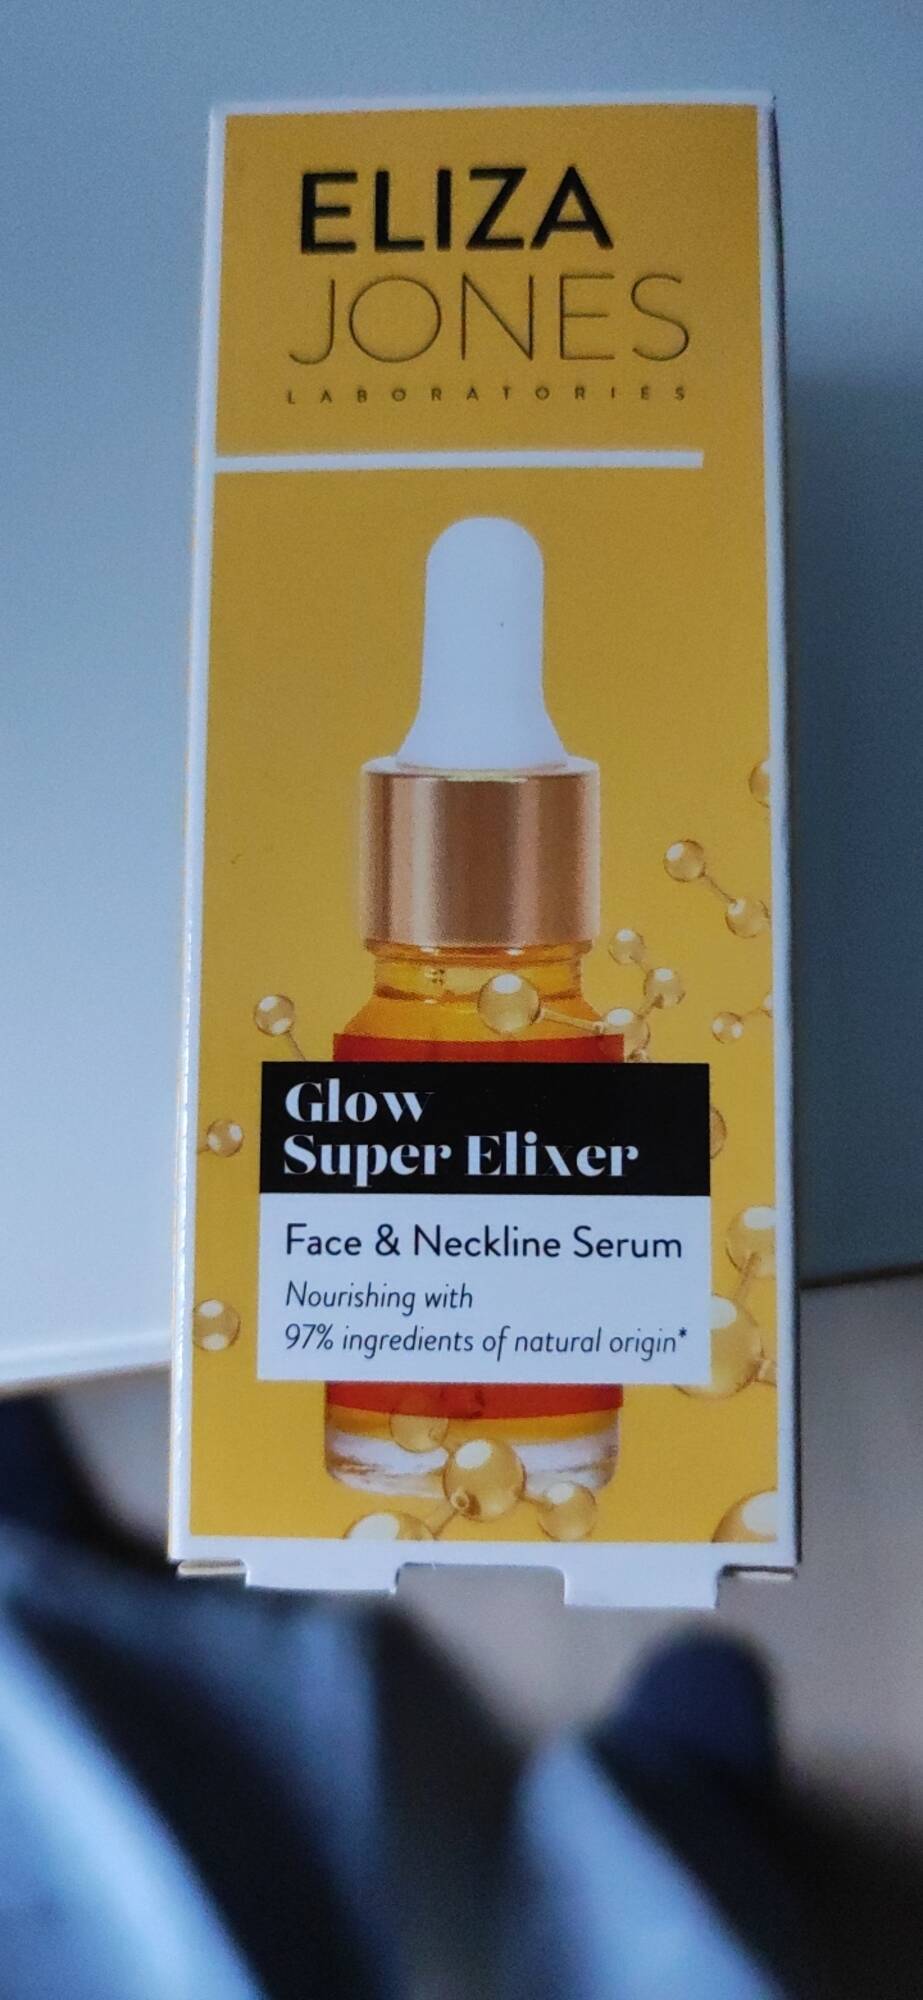 ELIZA JONES - Glow super eliver - Face & neckline serum